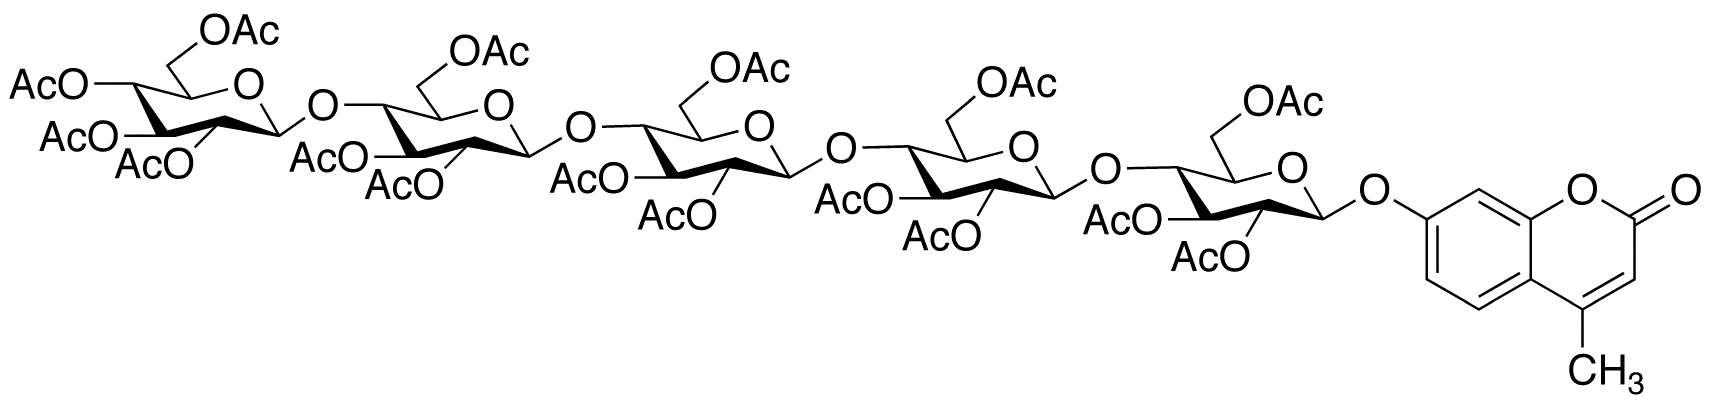 4-Methylumbelliferyl β-D-Cellopentoside Hexadecaacetate